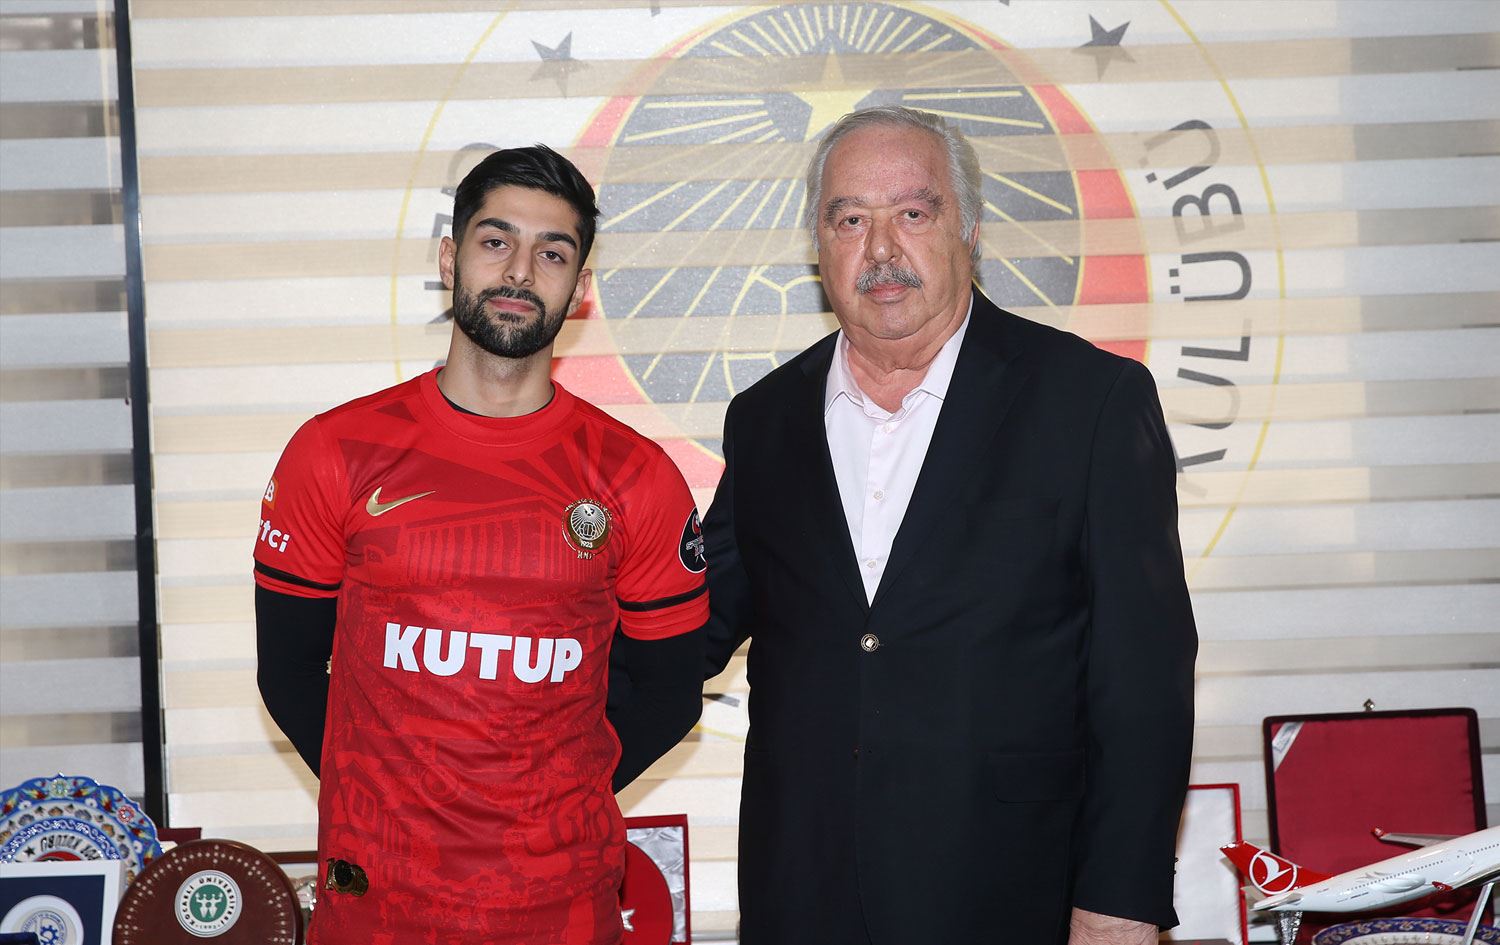 Gençlerbirliği terminates contract after 'realizing the player is Kurdish' 1